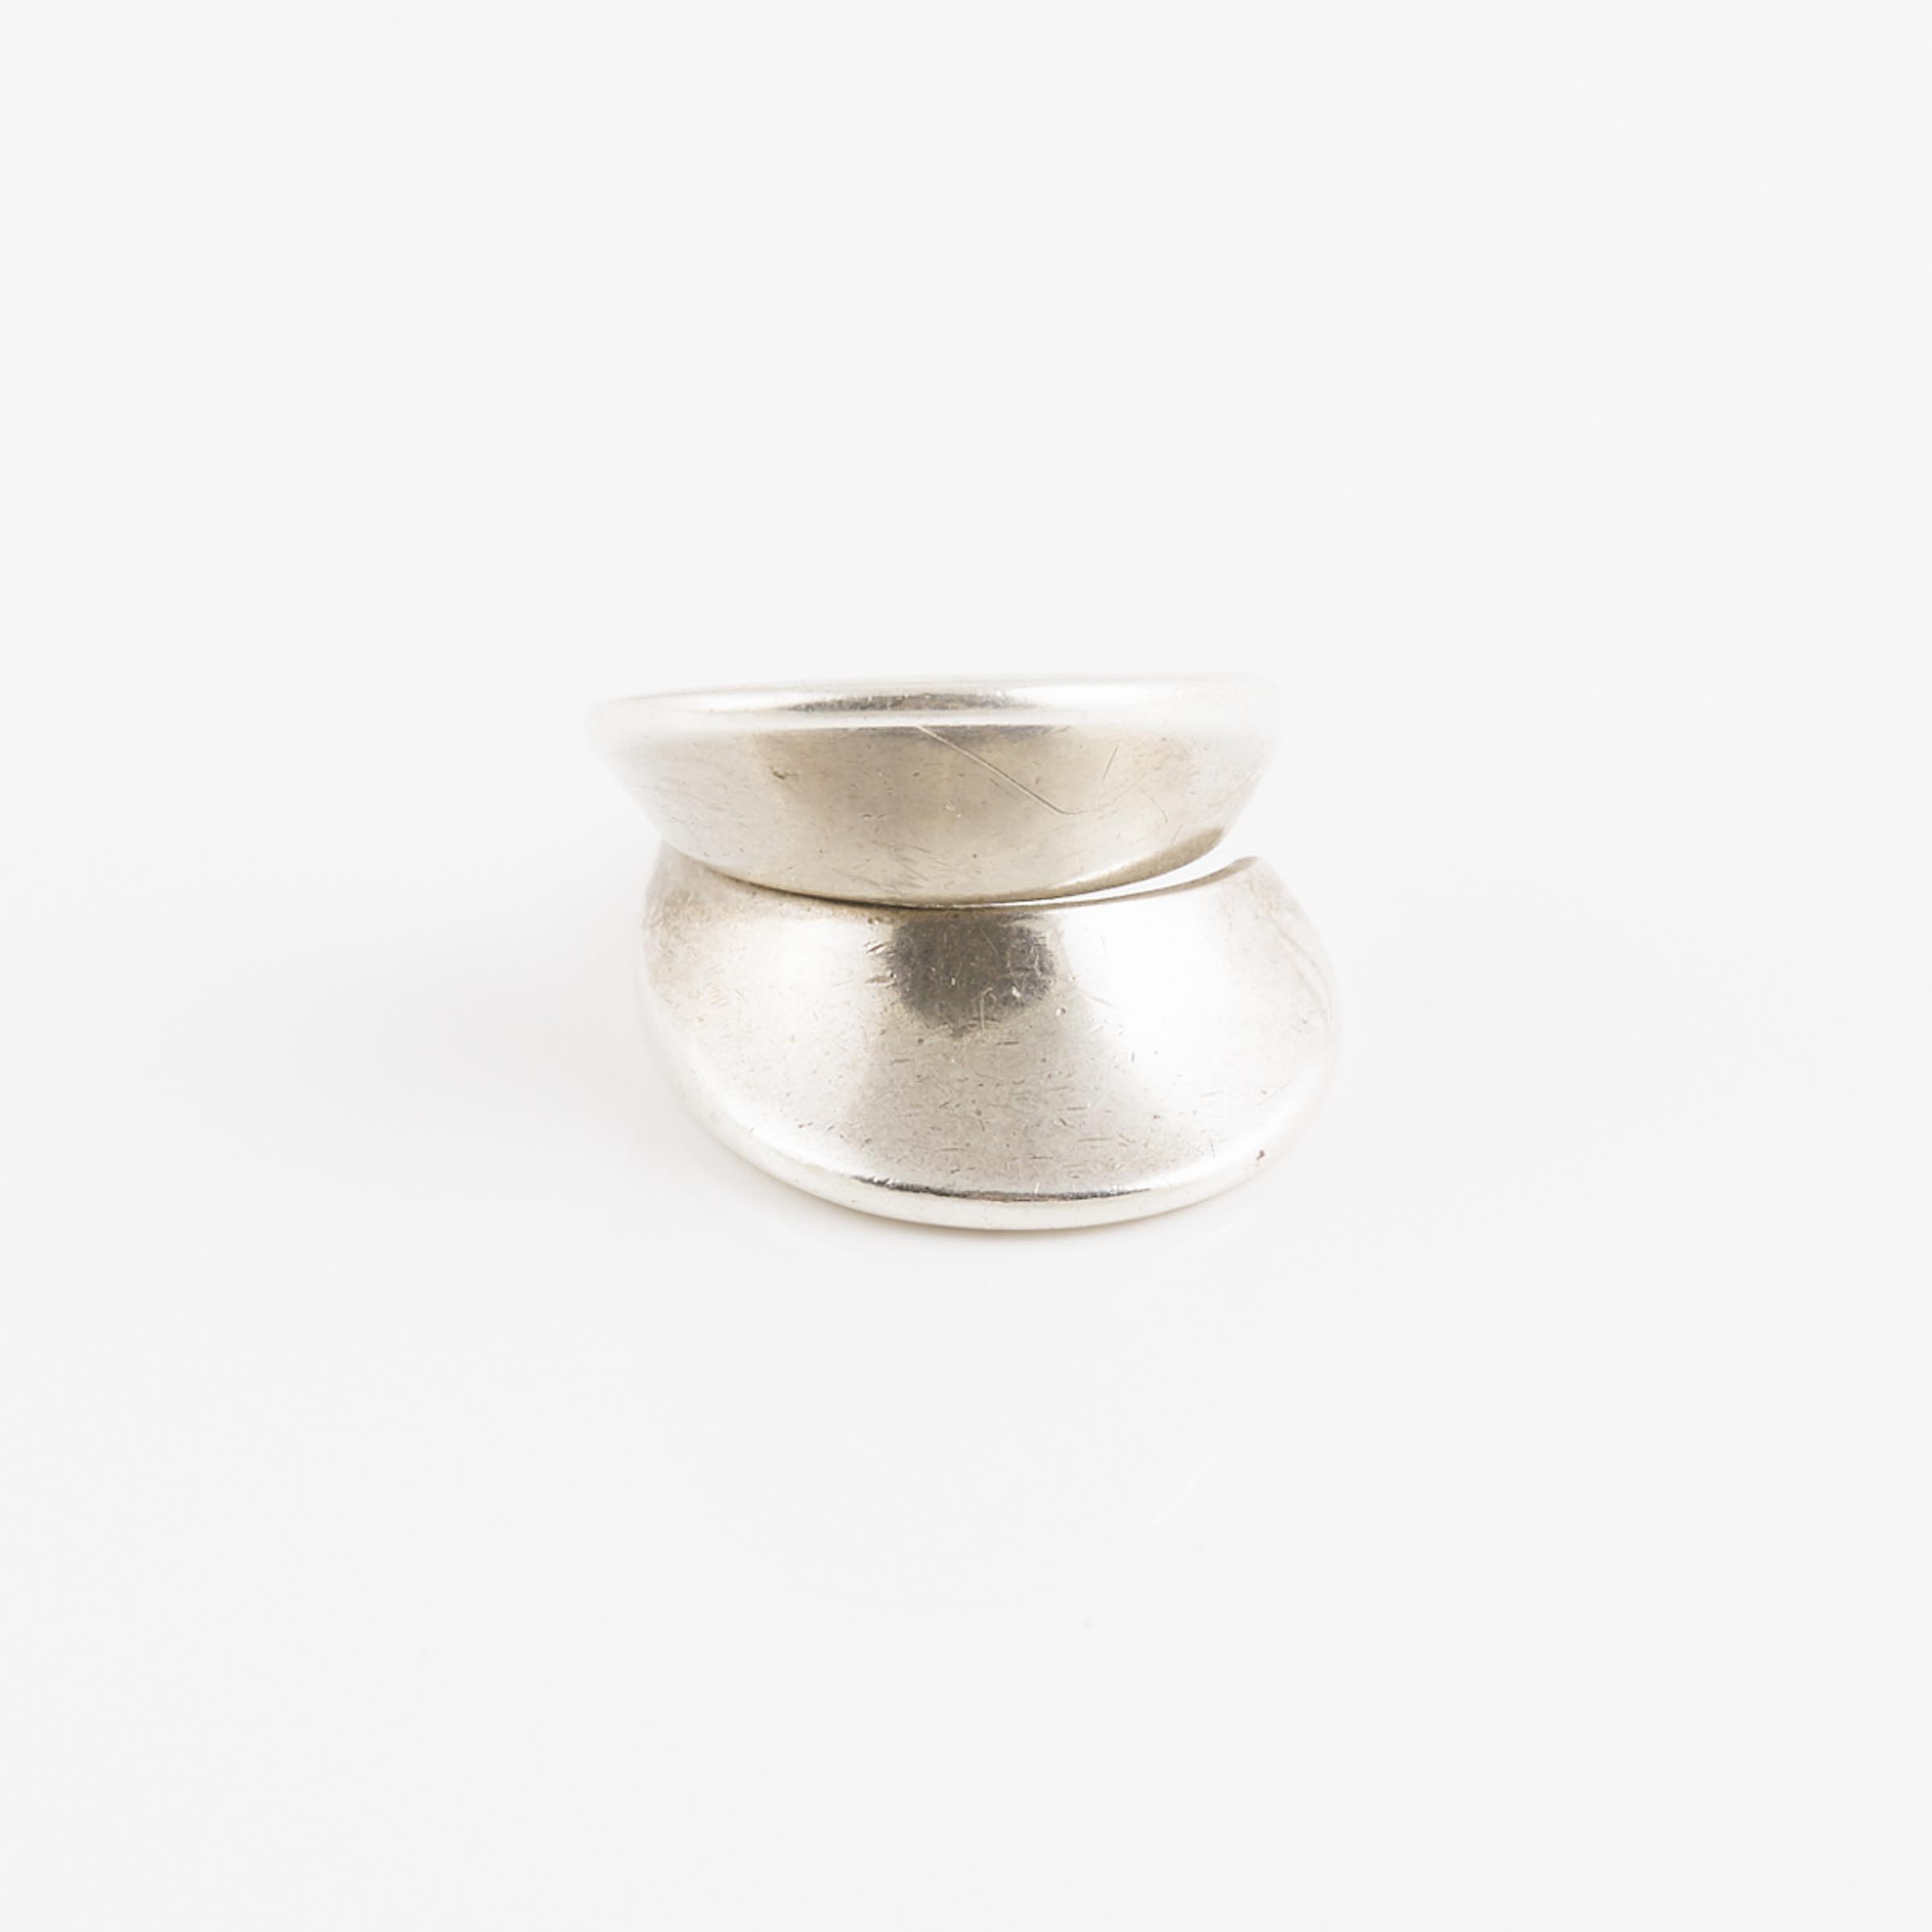 Georg Jensen Danish Sterling Silver Ring